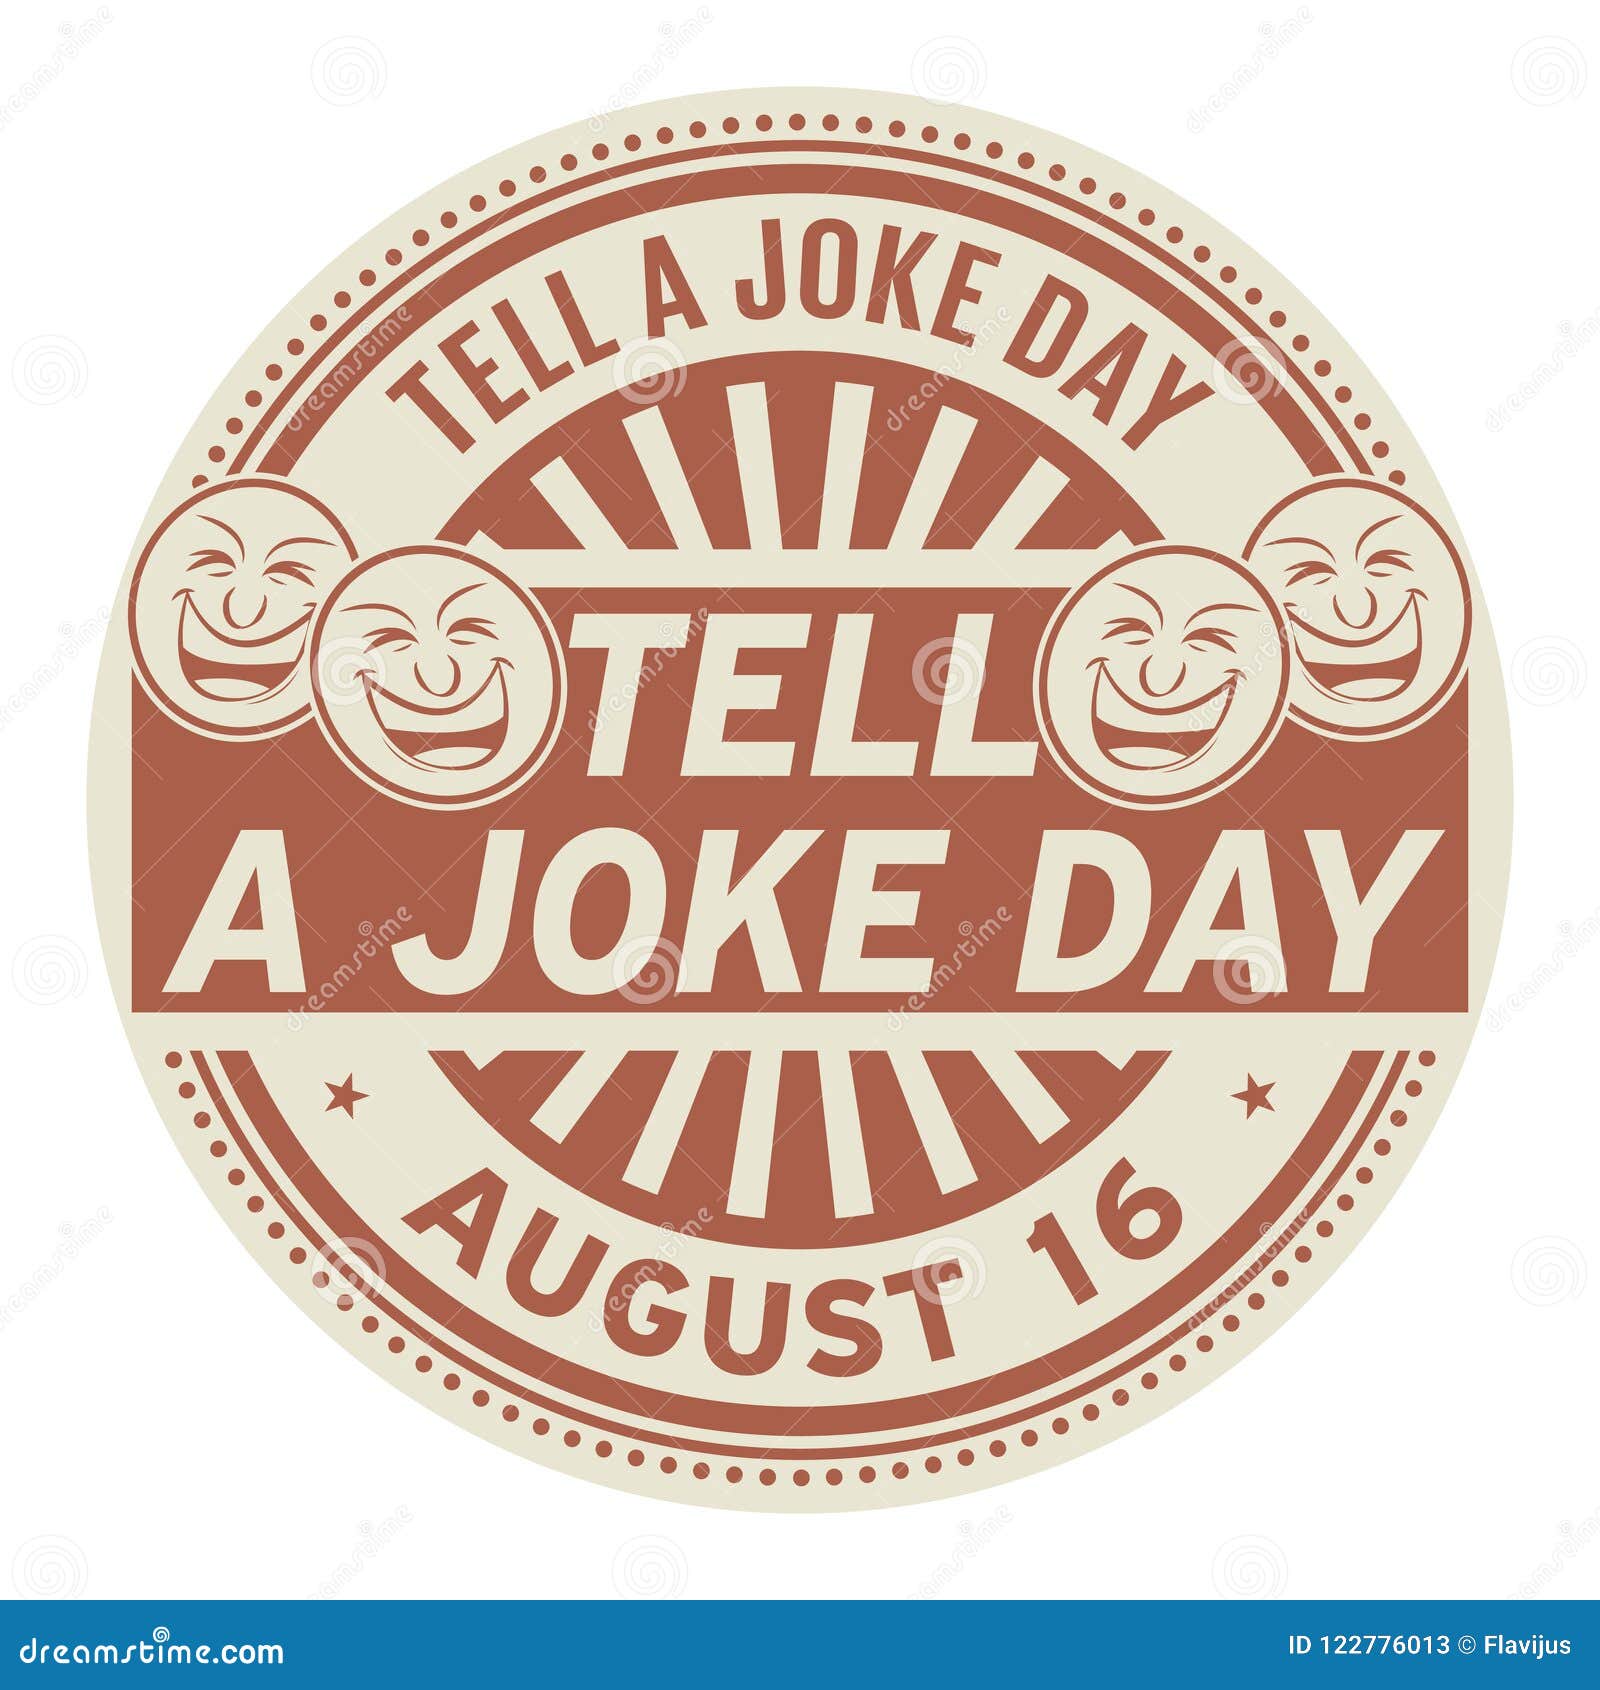 tell a joke day, august 16